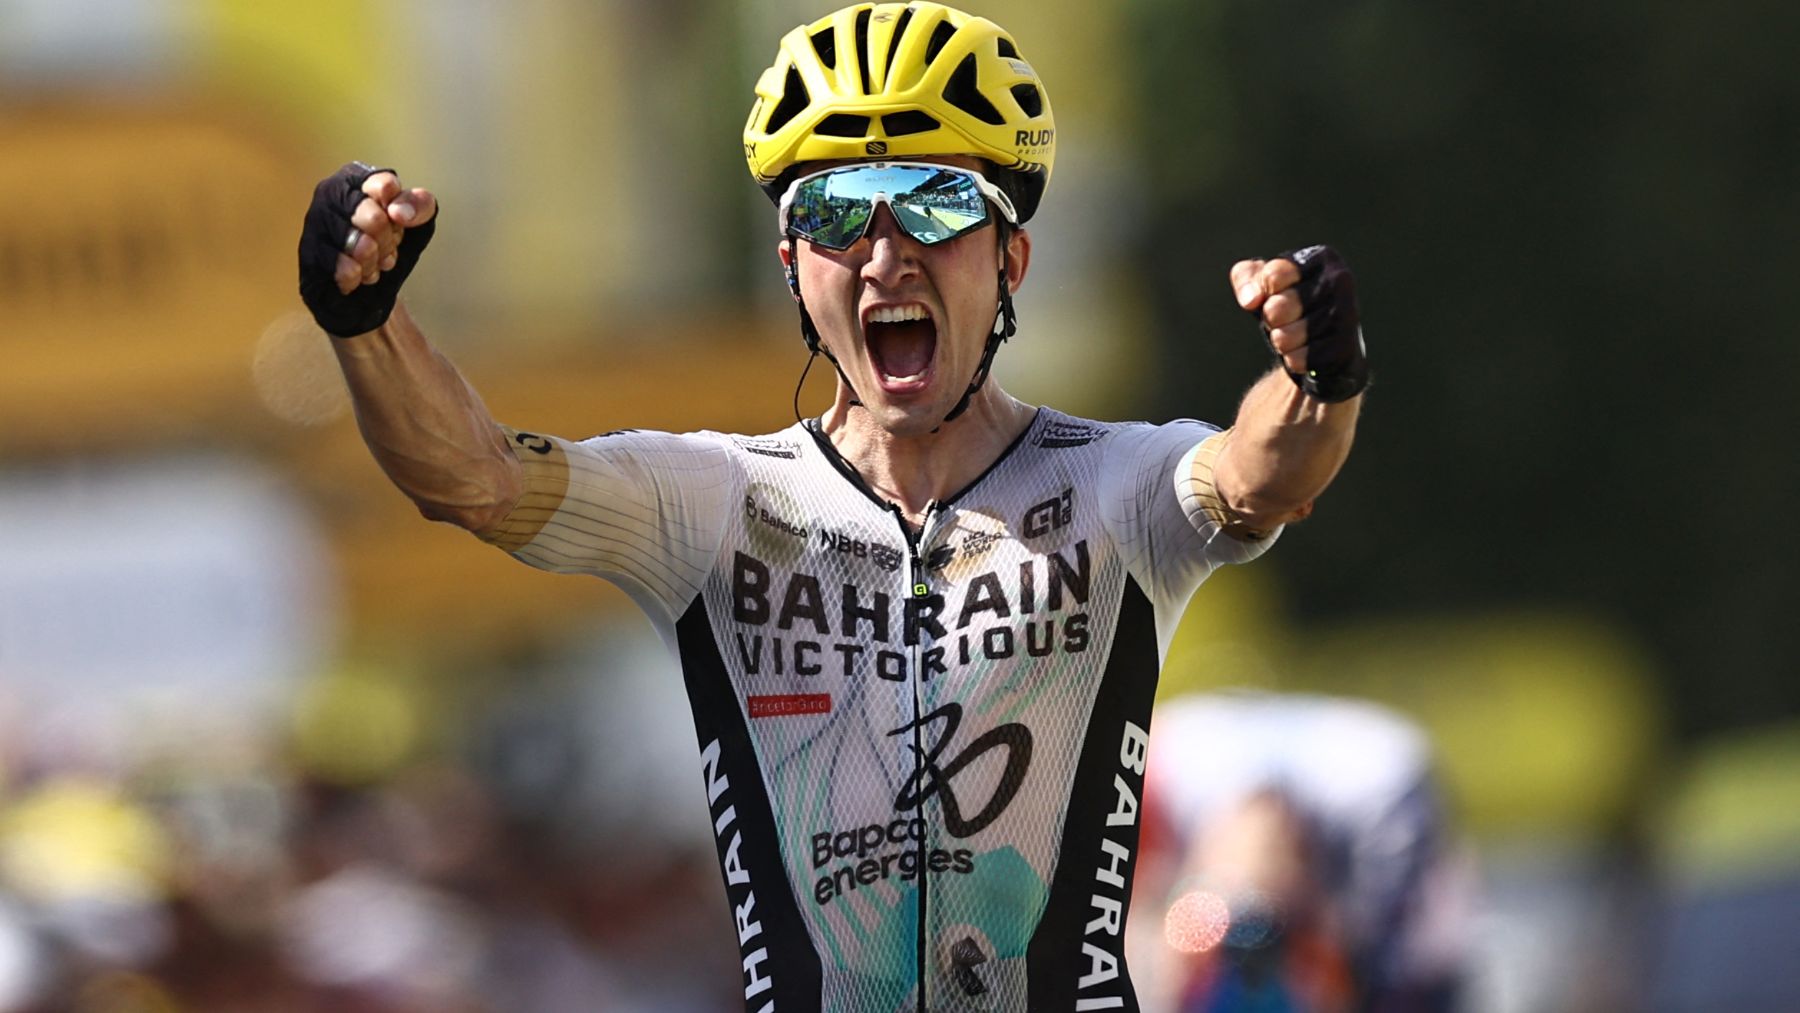 Pello Bilbao celebra la victoria en el Tour. (AFP)